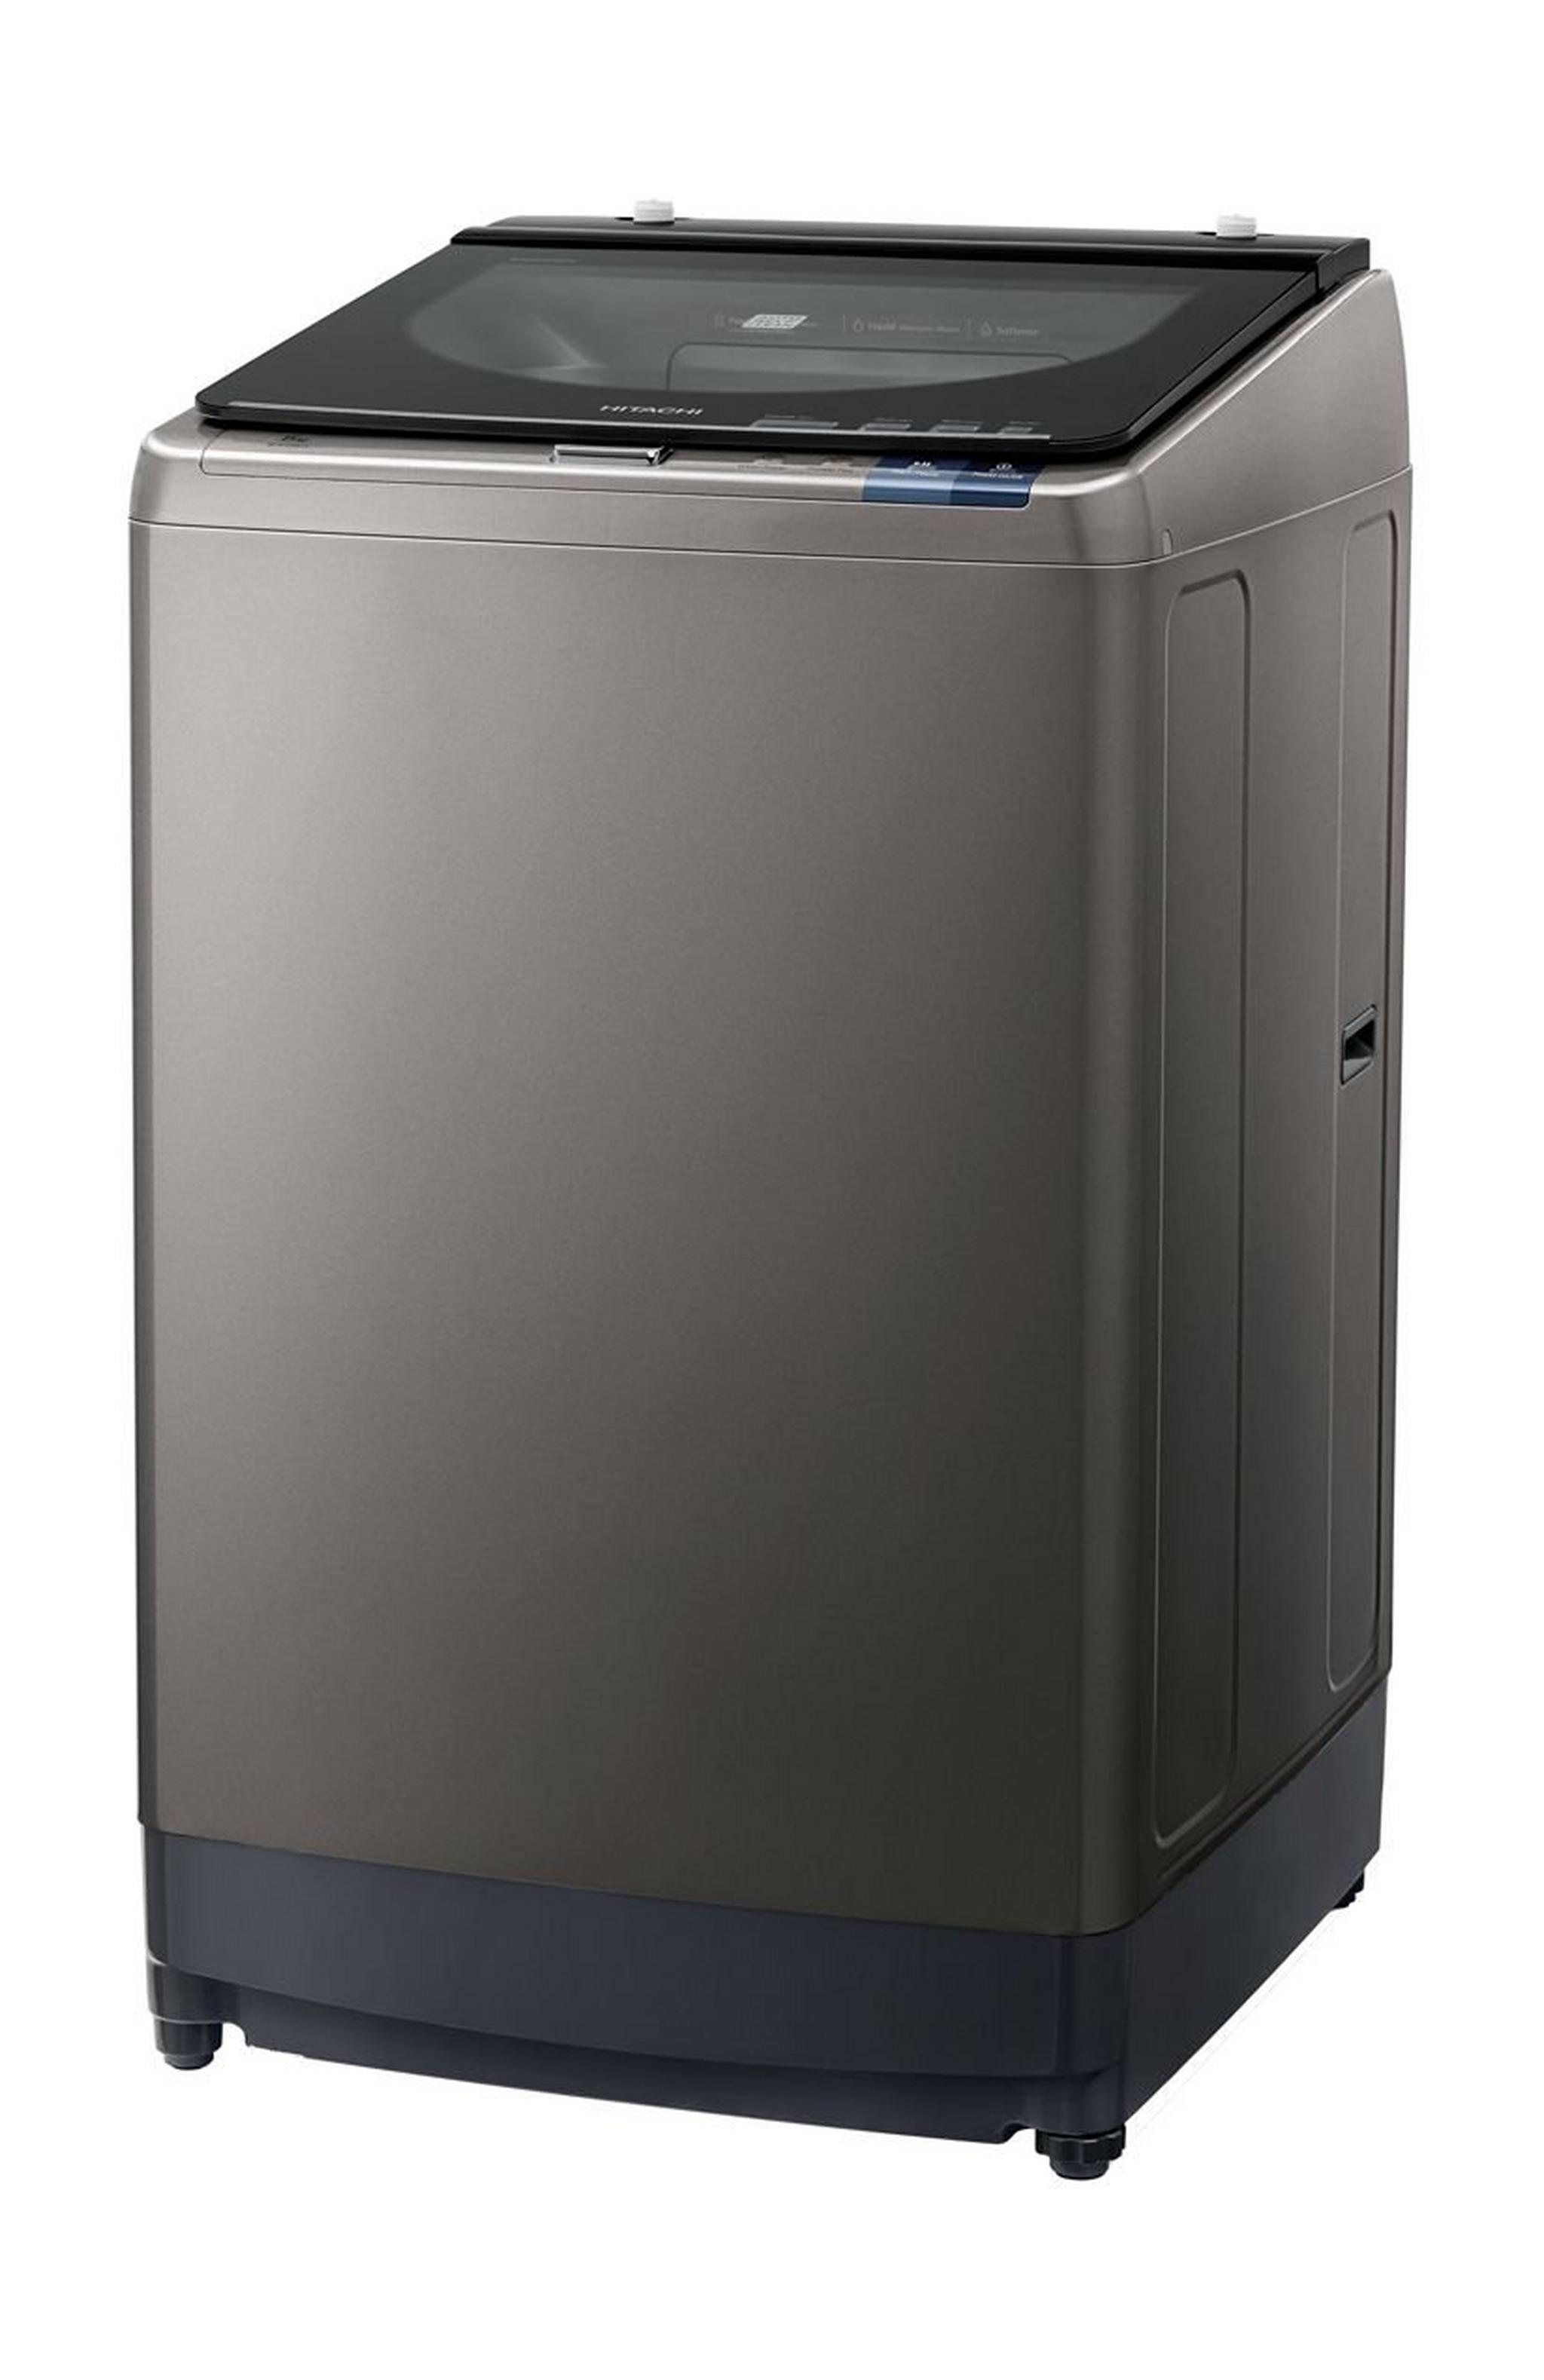 Hitachi 14kg Top Load Washing Machine SF-P140XTV - Silver